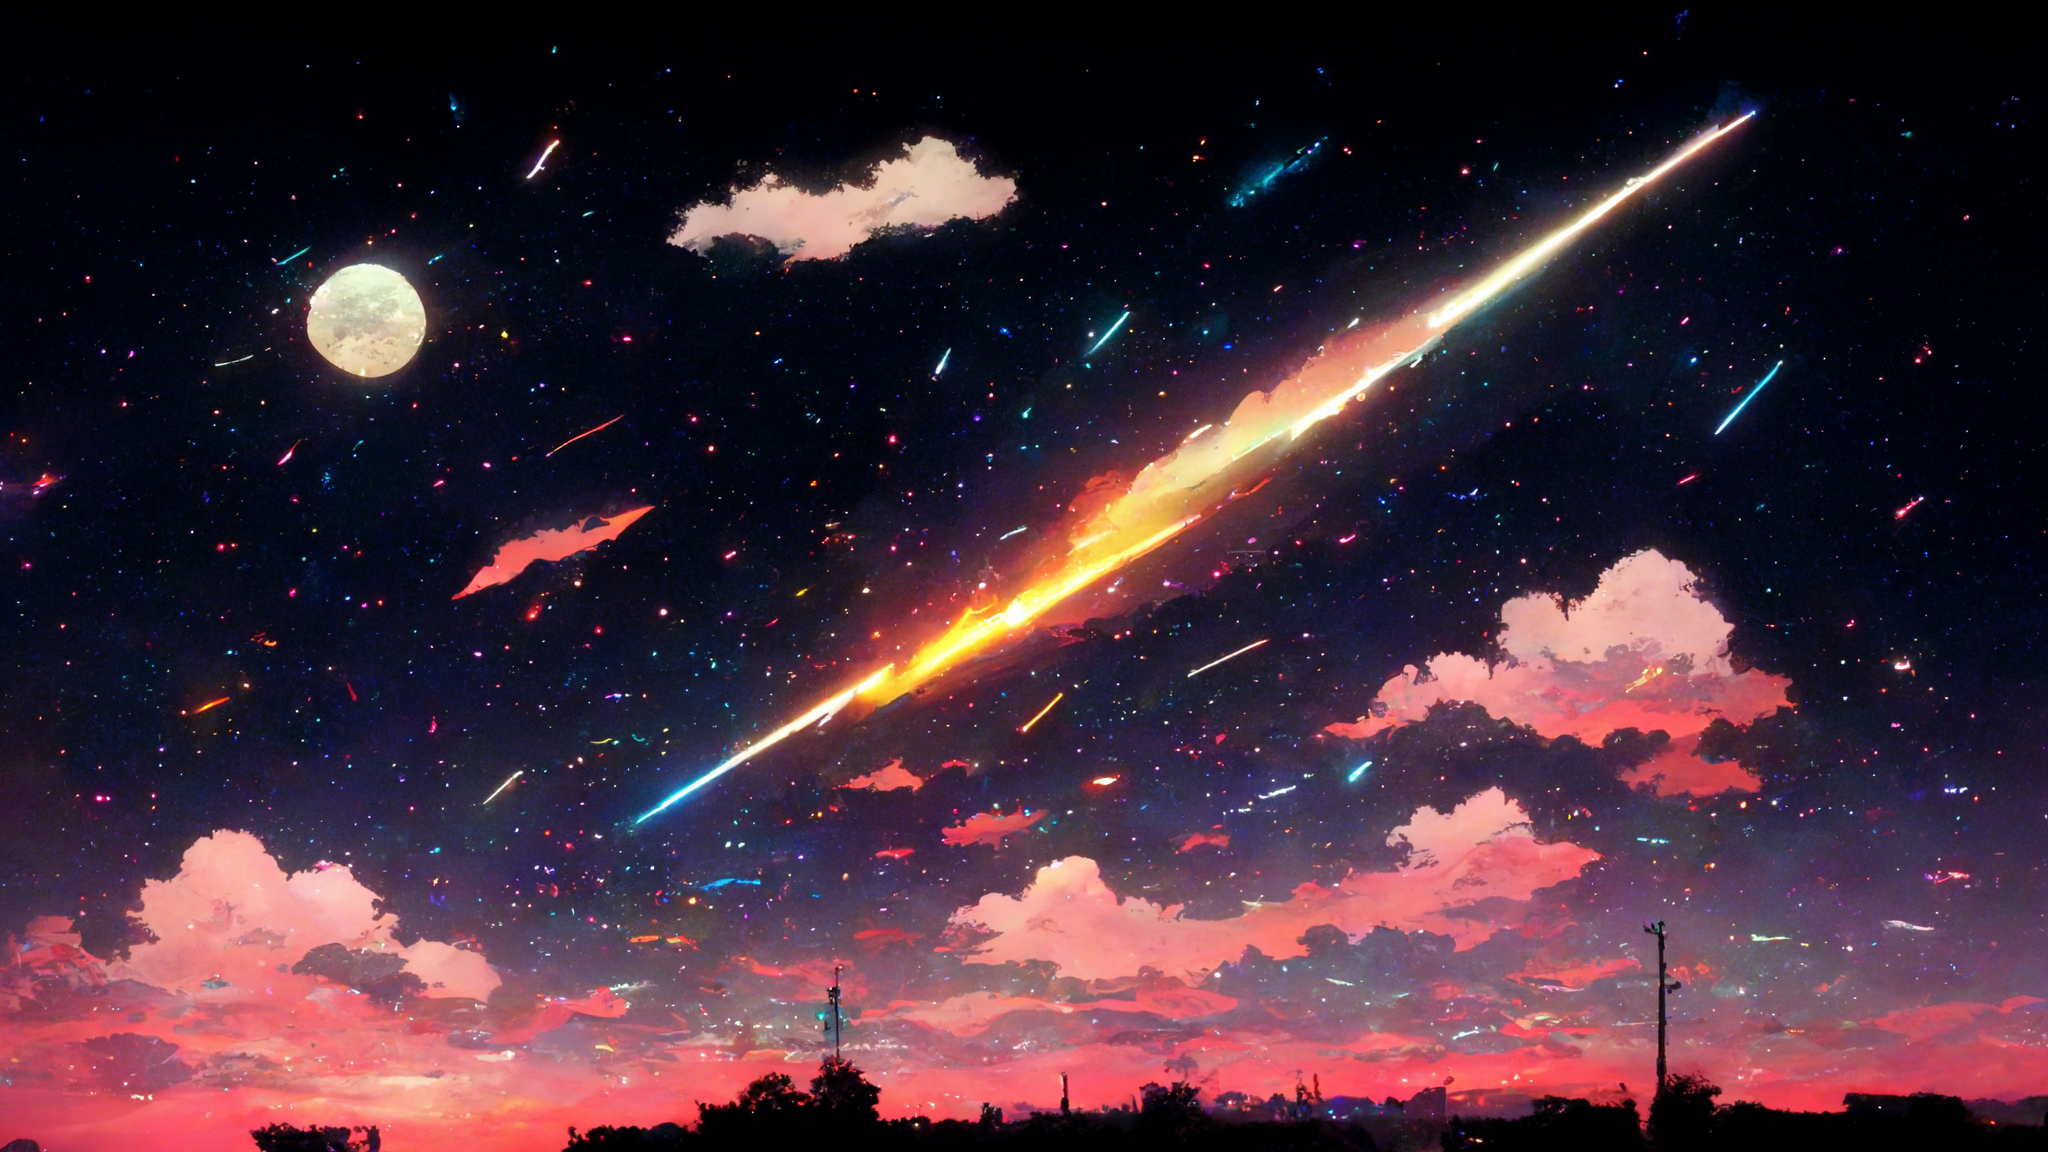 Mid Journey is an amazing wallpaper generator. *Meteor, night sky, anime style*